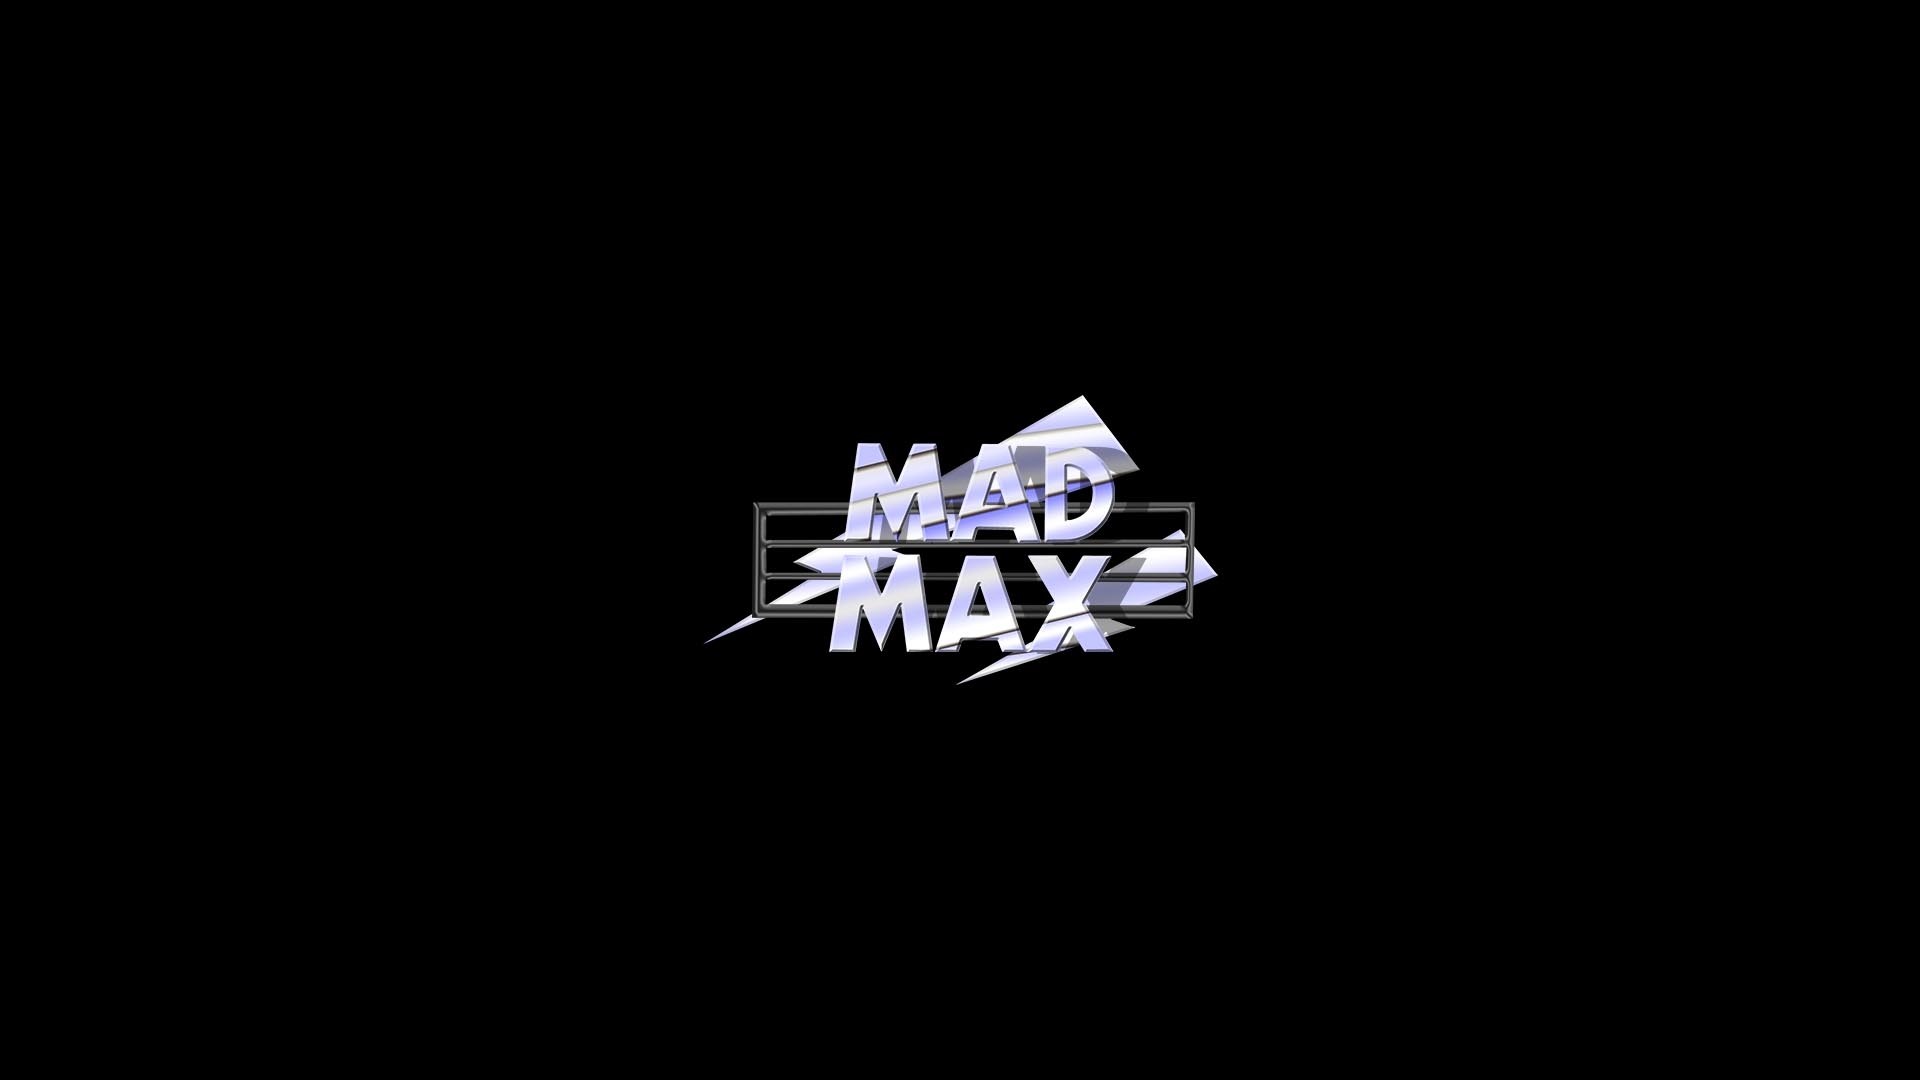 Mad Max wallpaper